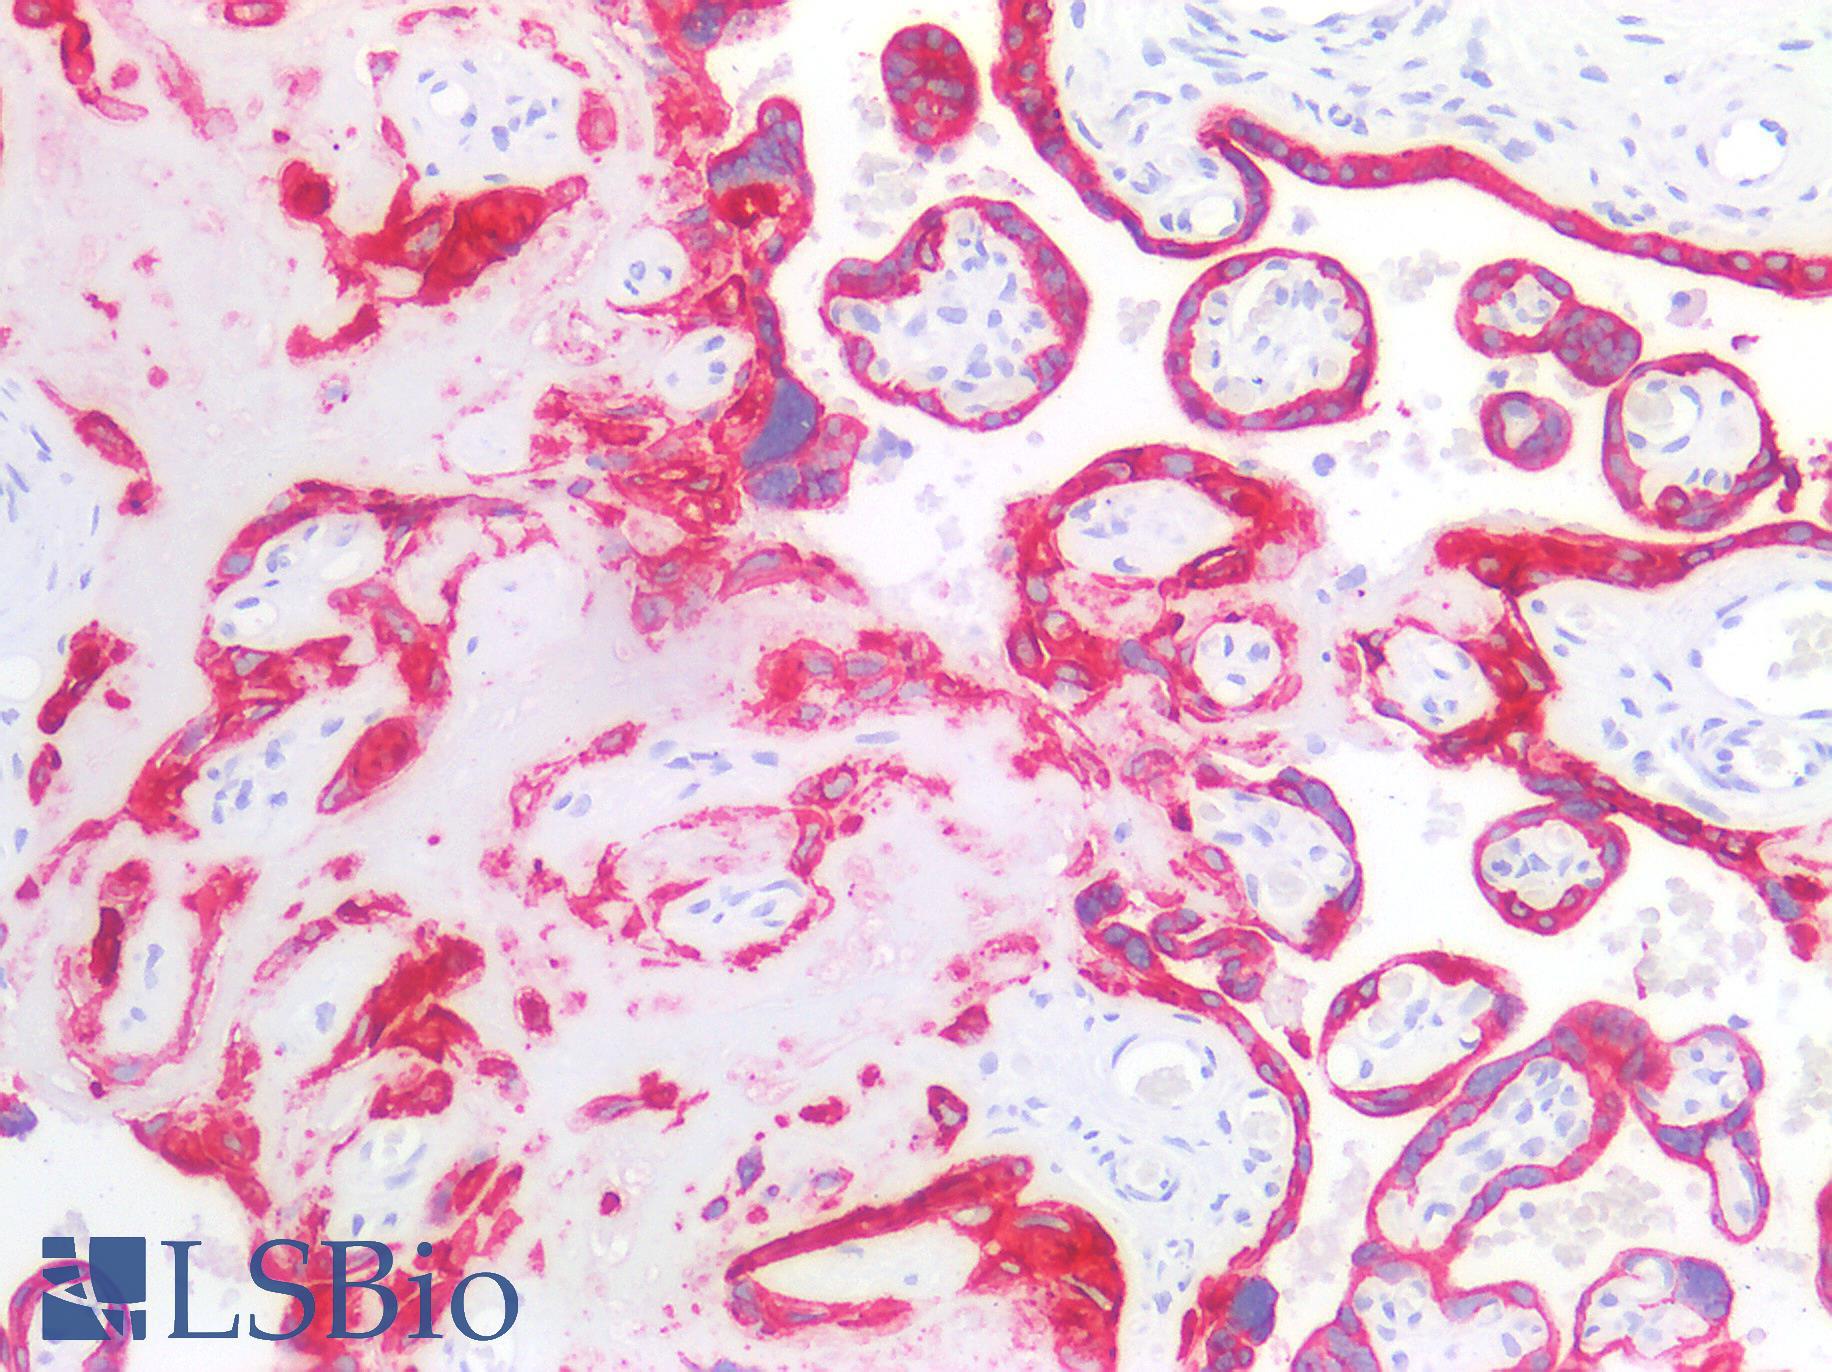 Acidic Cytokeratin AE1 Antibody - Human Placenta: Formalin-Fixed, Paraffin-Embedded (FFPE)